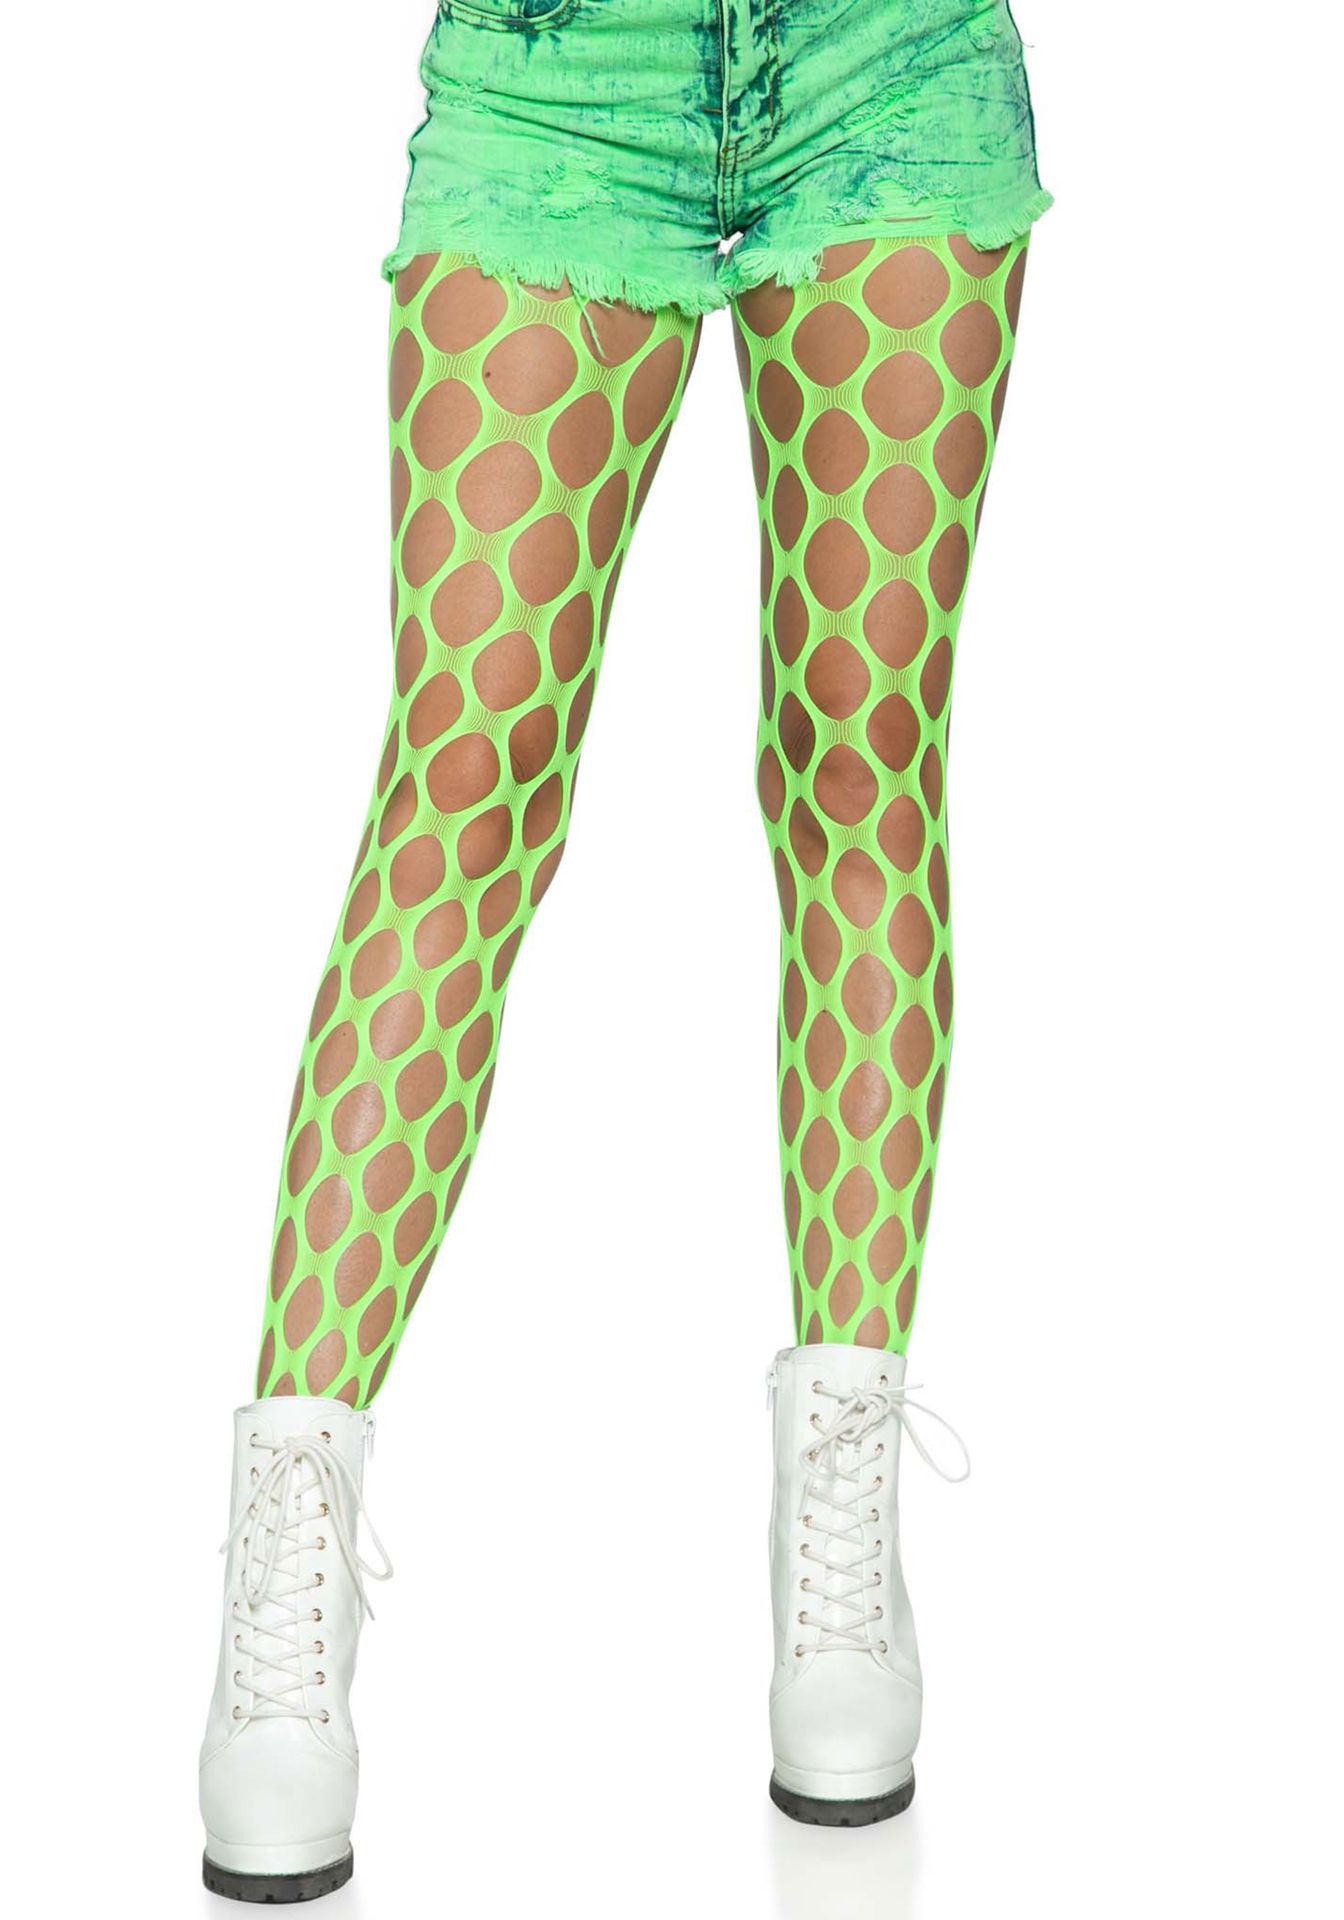 Neon groene panty met grote gaten